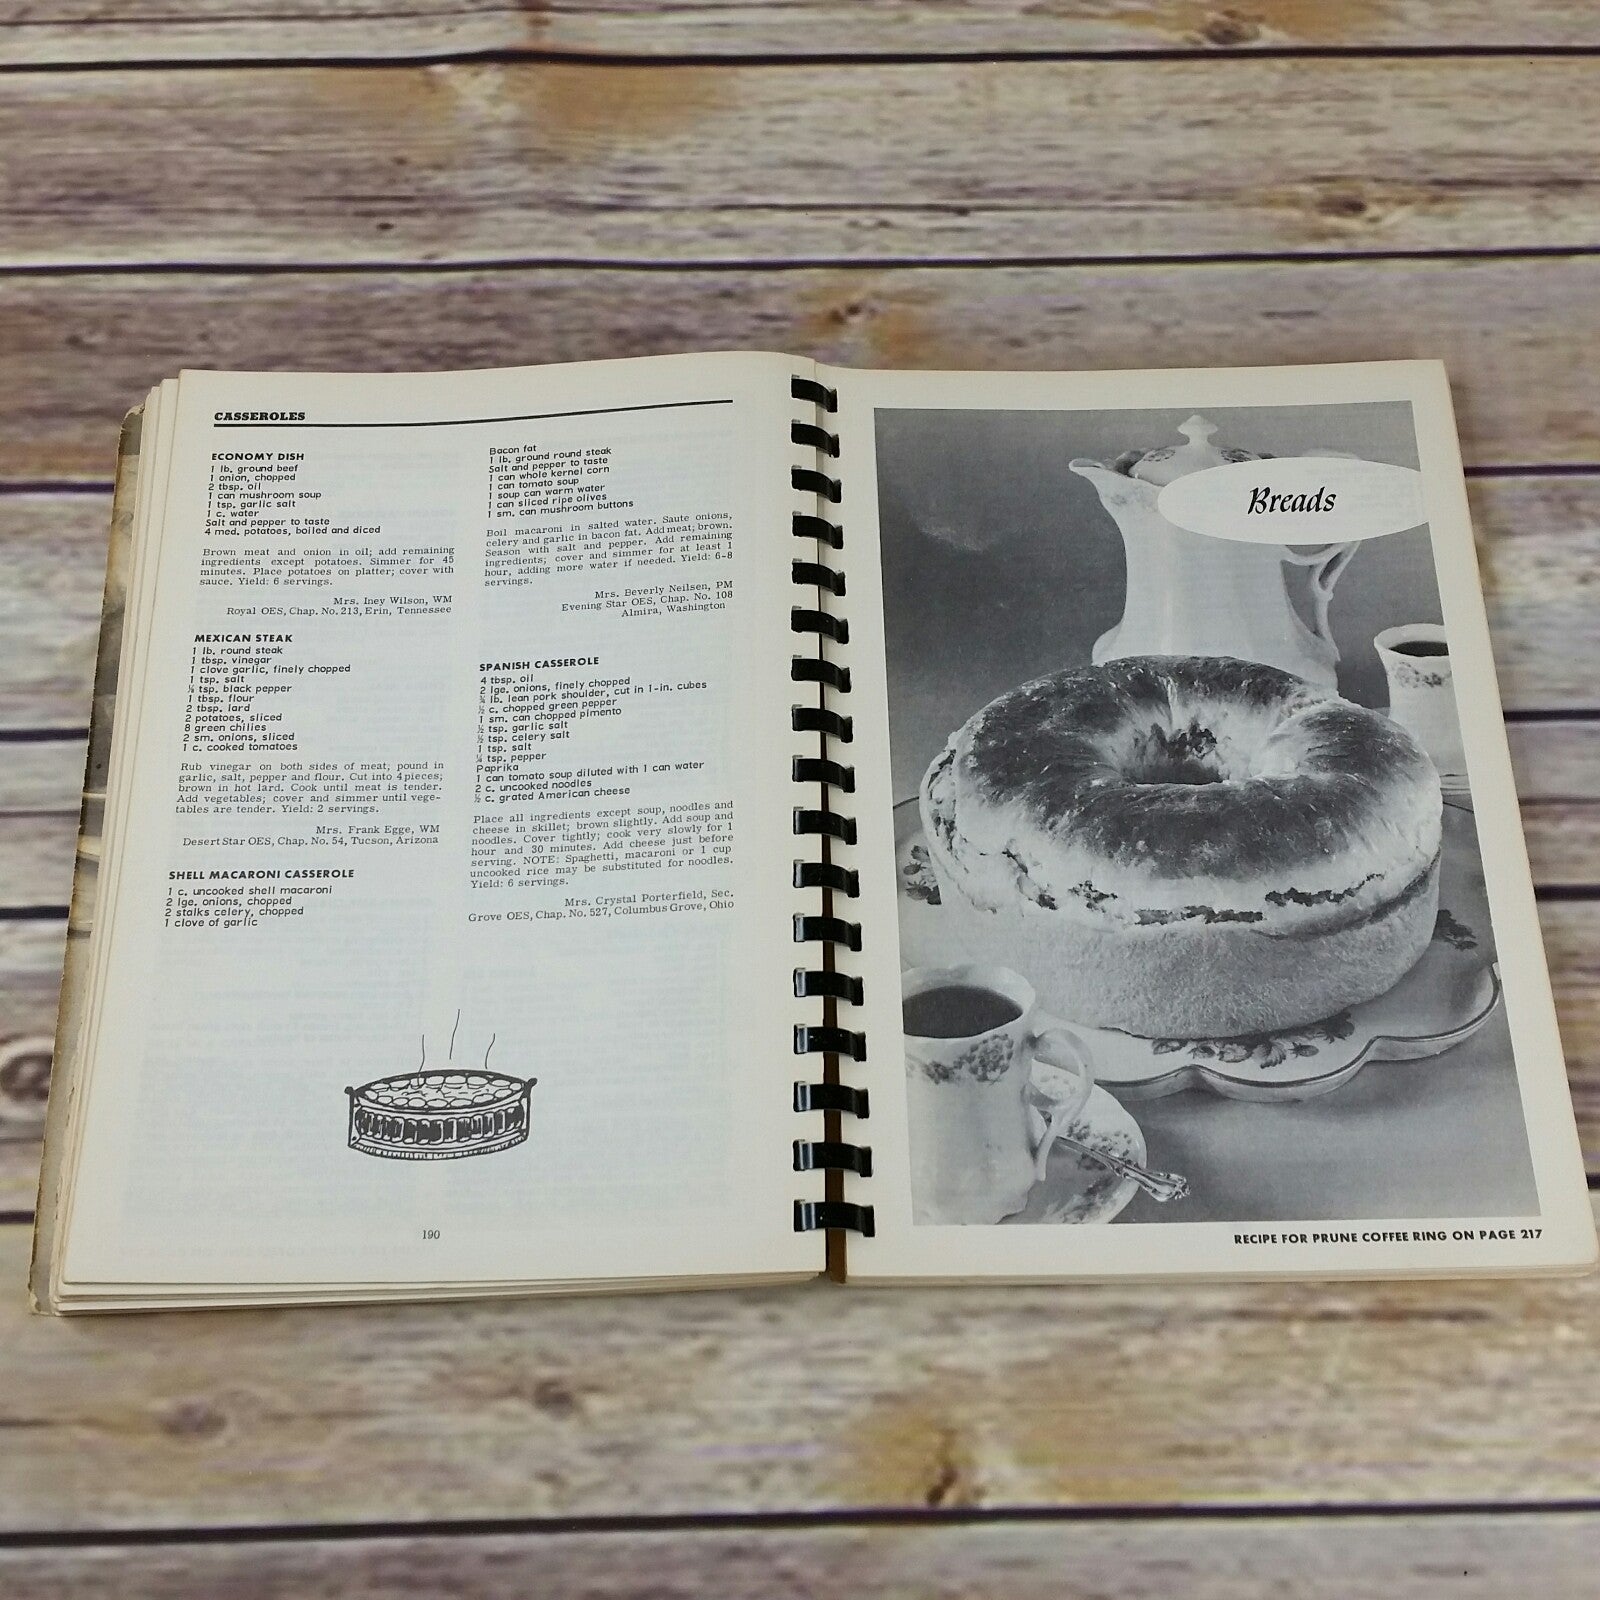 Vintage Cookbook Favorite Eastern Star Olde Family 2000 Recipes 1965 Spiral Bound - At Grandma's Table